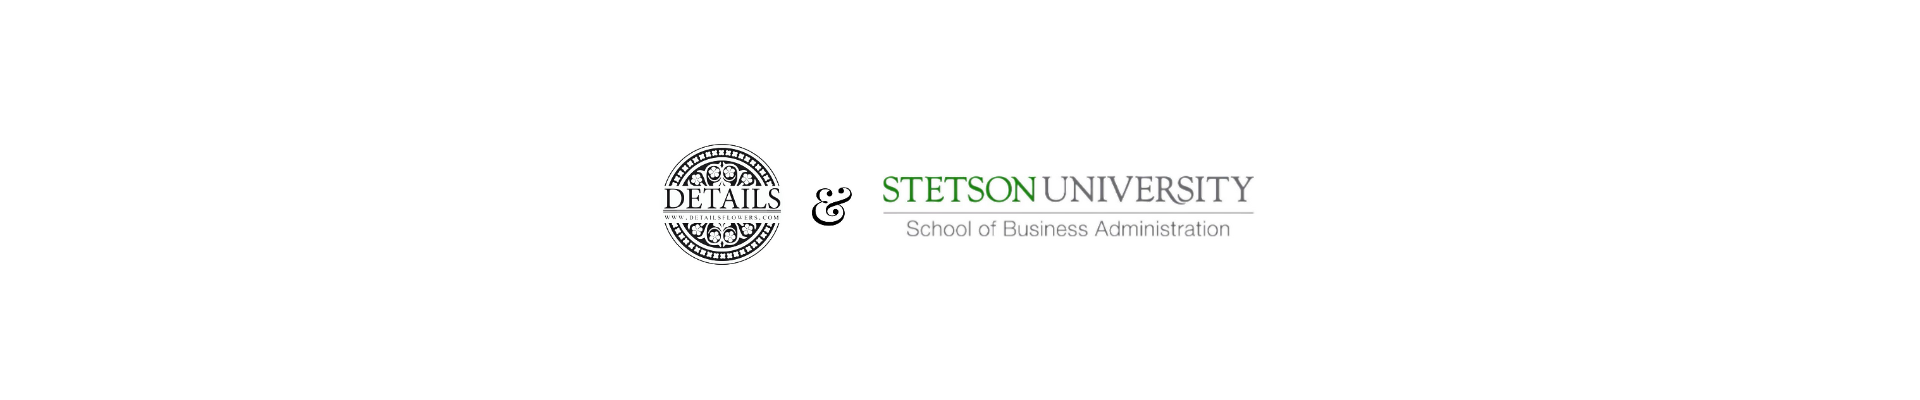 Details Flower Software and Stetson University Partnership